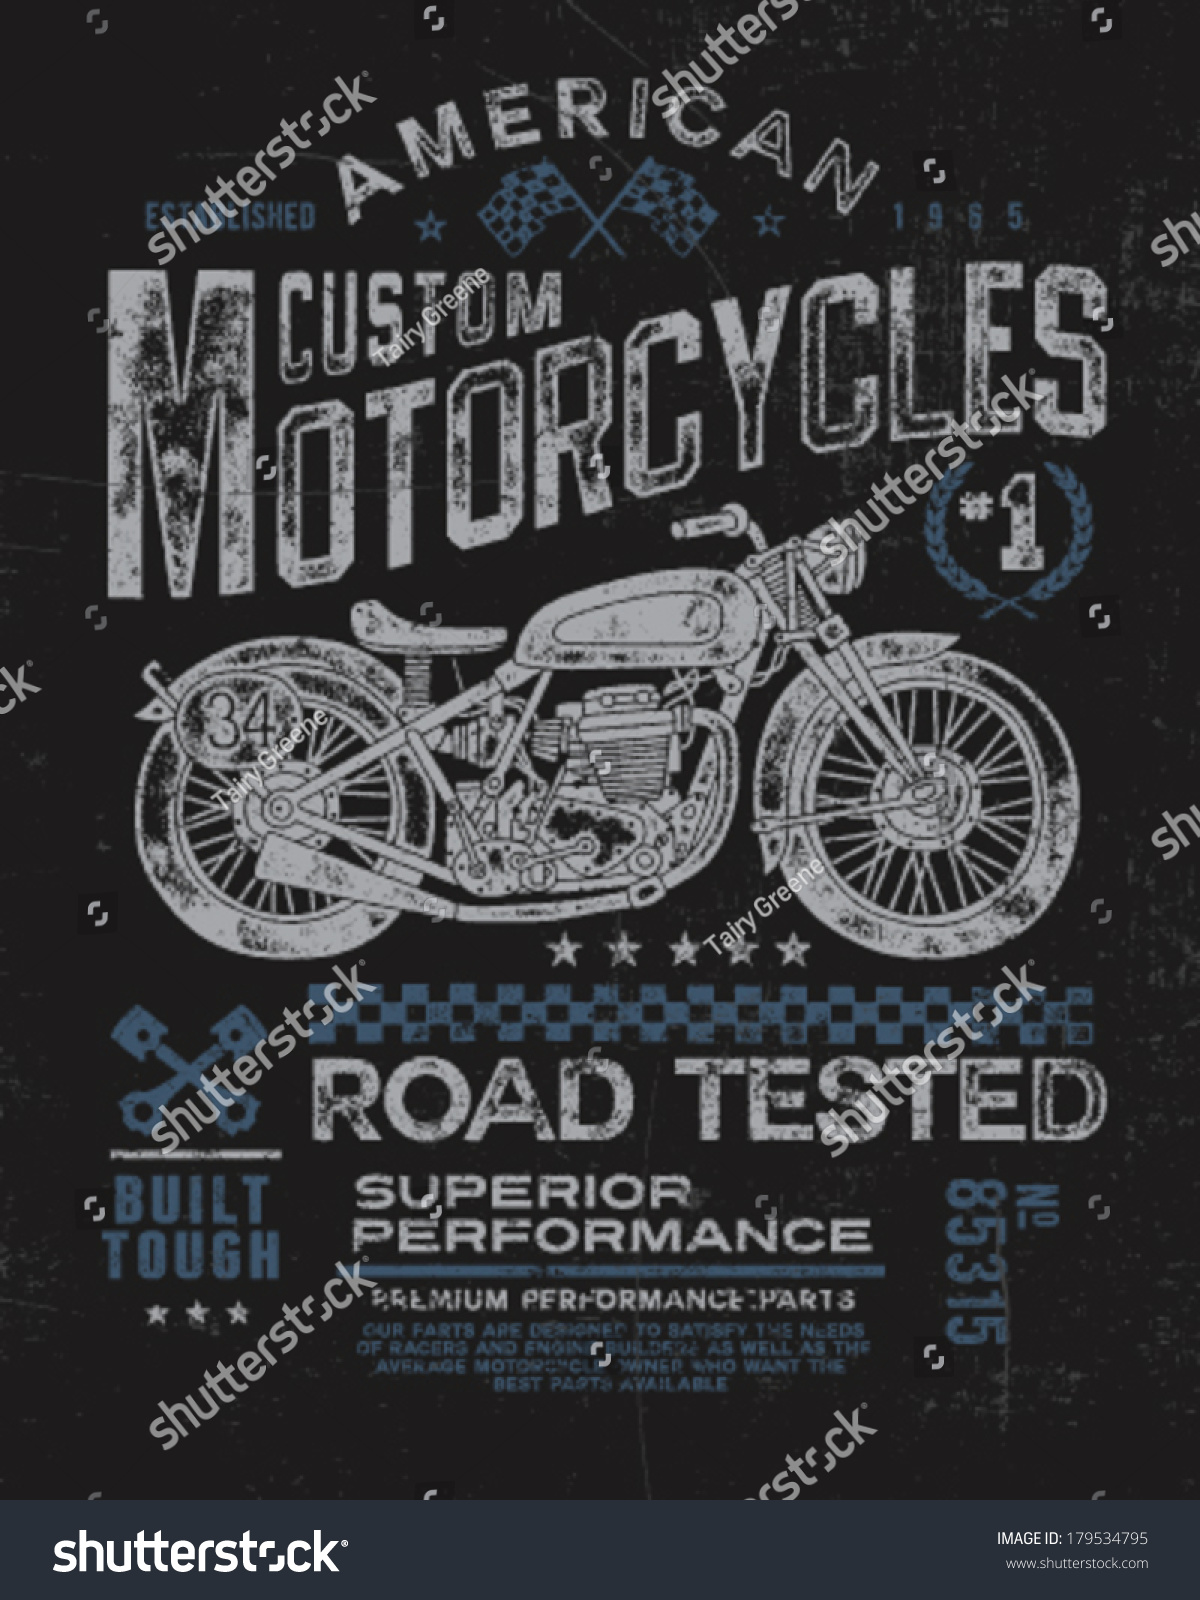 Download Vintage Motorcycle Tshirt Graphic Stock Vector 179534795 ...